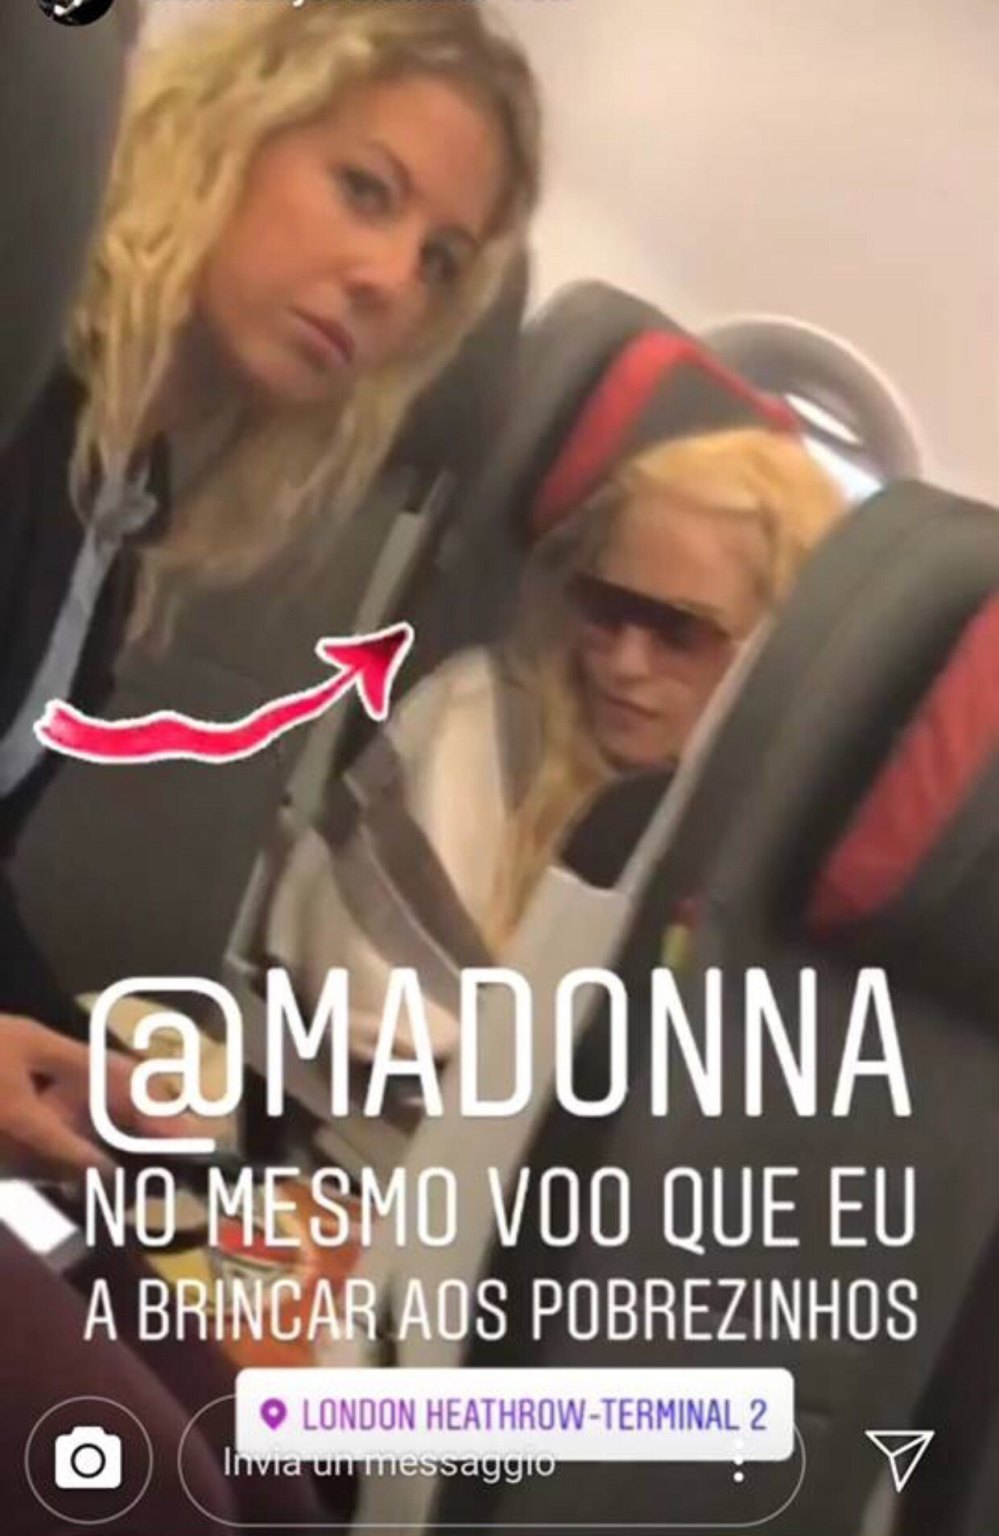 Madonna flies coach